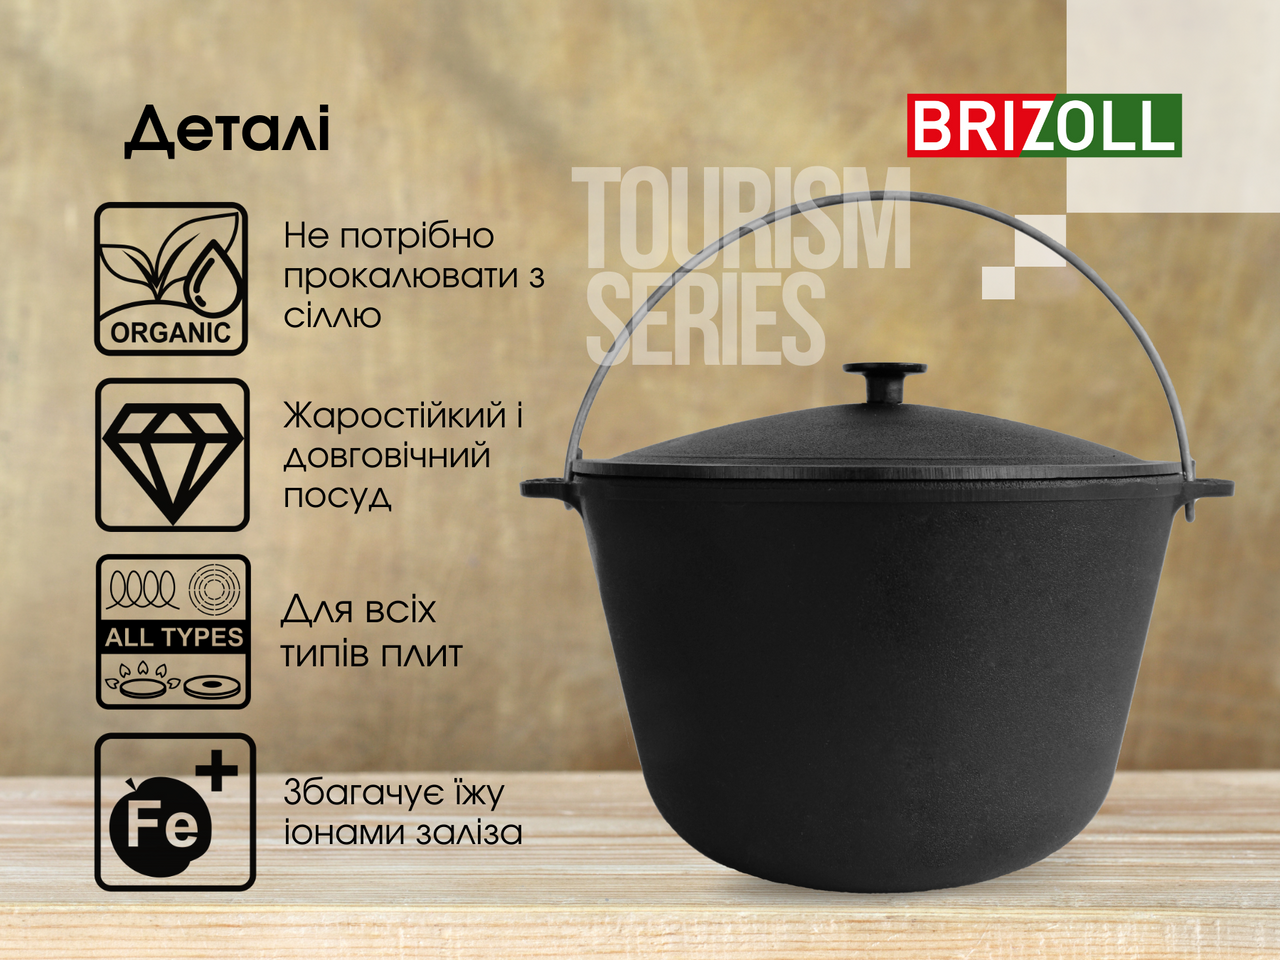 Cast iron tourist cauldron 8 L with a lid and A bag